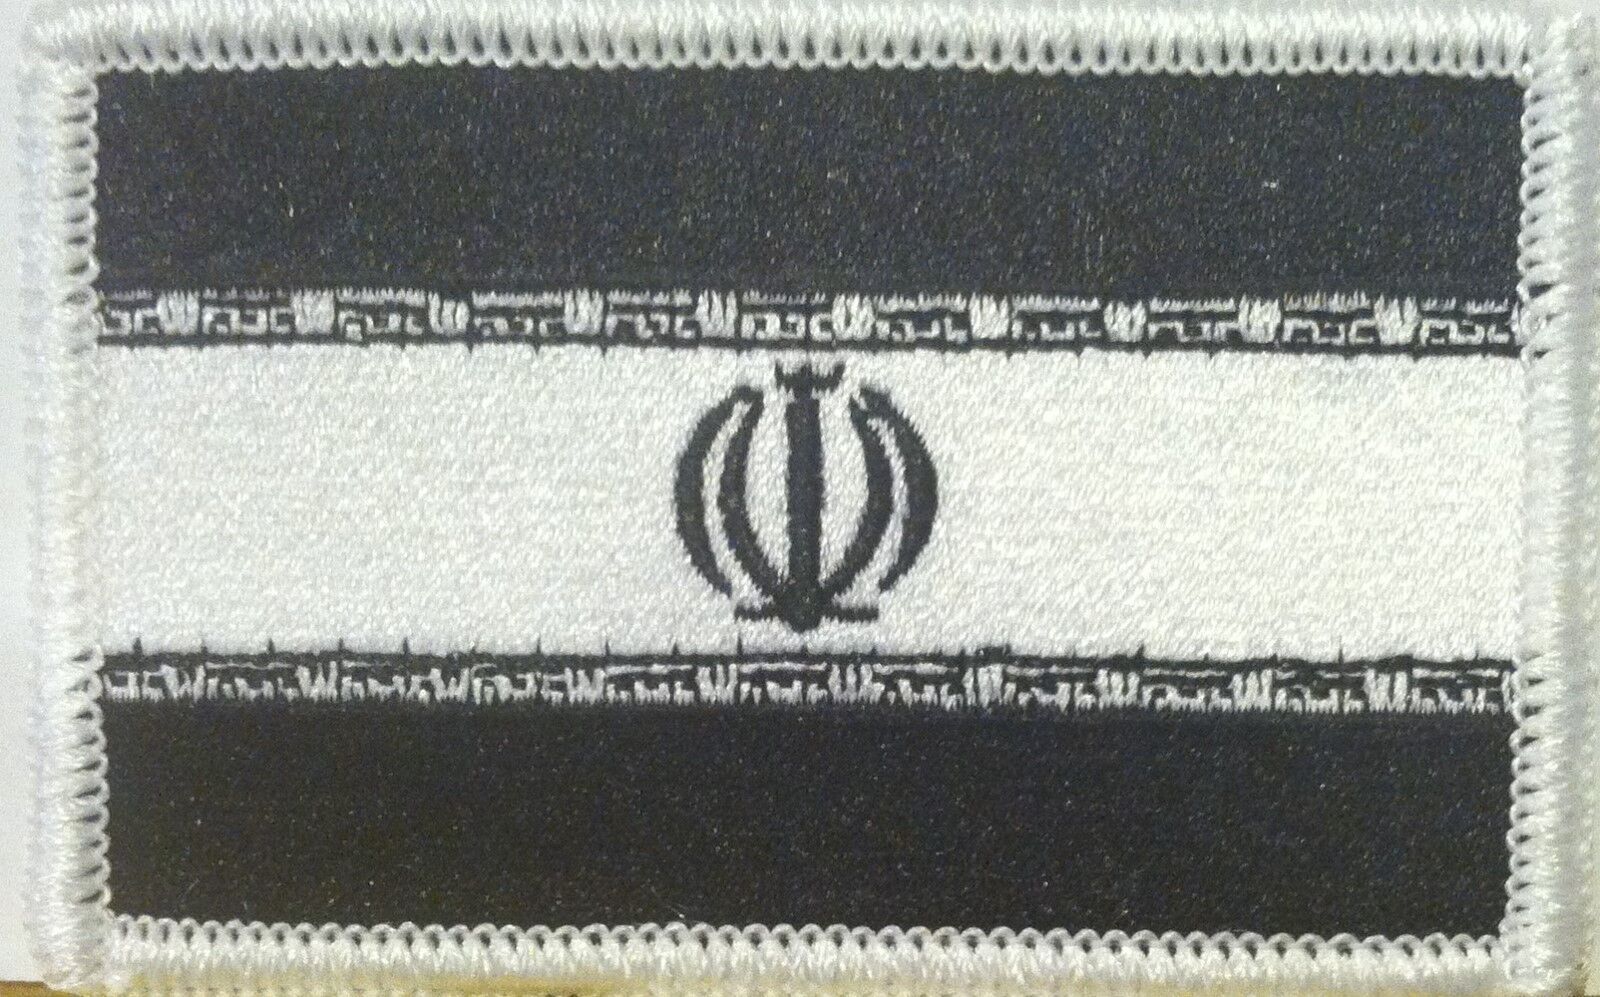 IRAN Flag Patch W/ VELCRO® Brand  Fastener B & W Tactical White Border #22